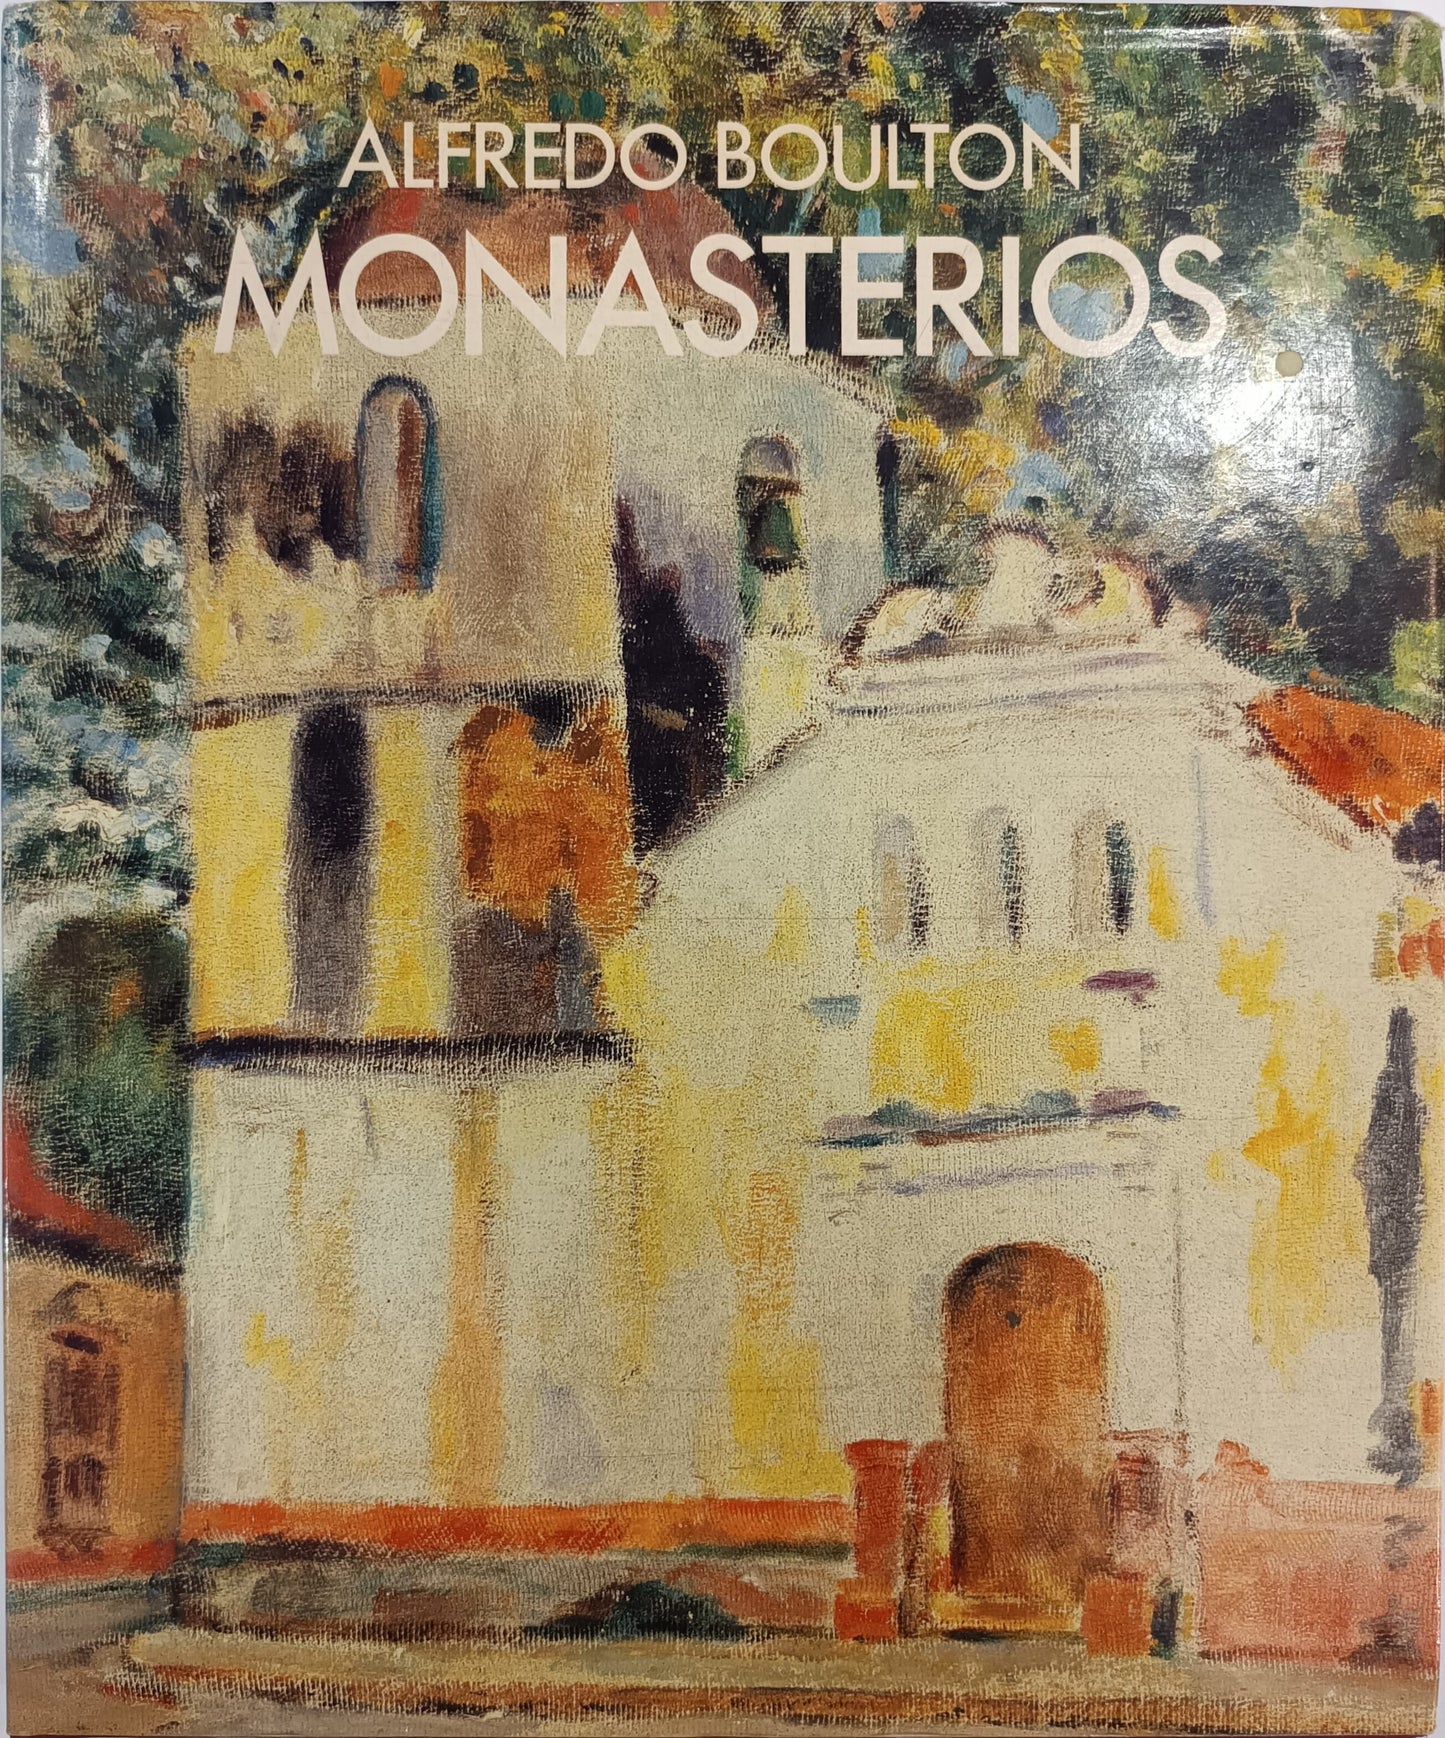 Monasterios